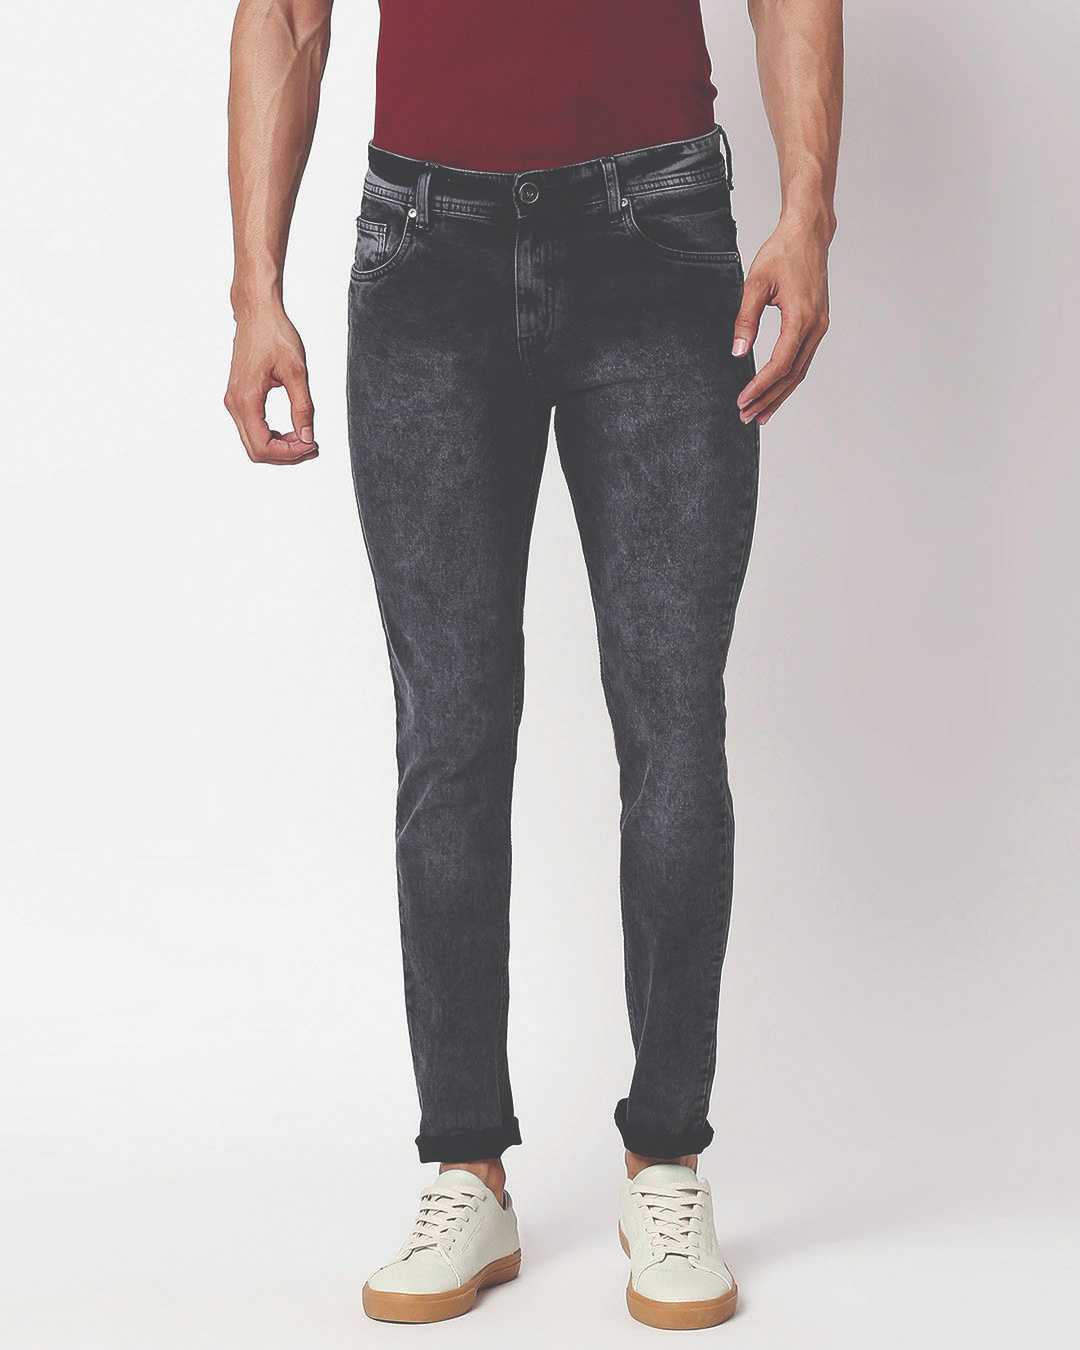 Buy Men's Black Slim Fit Faded Jeans for Men Black Online at Bewakoof